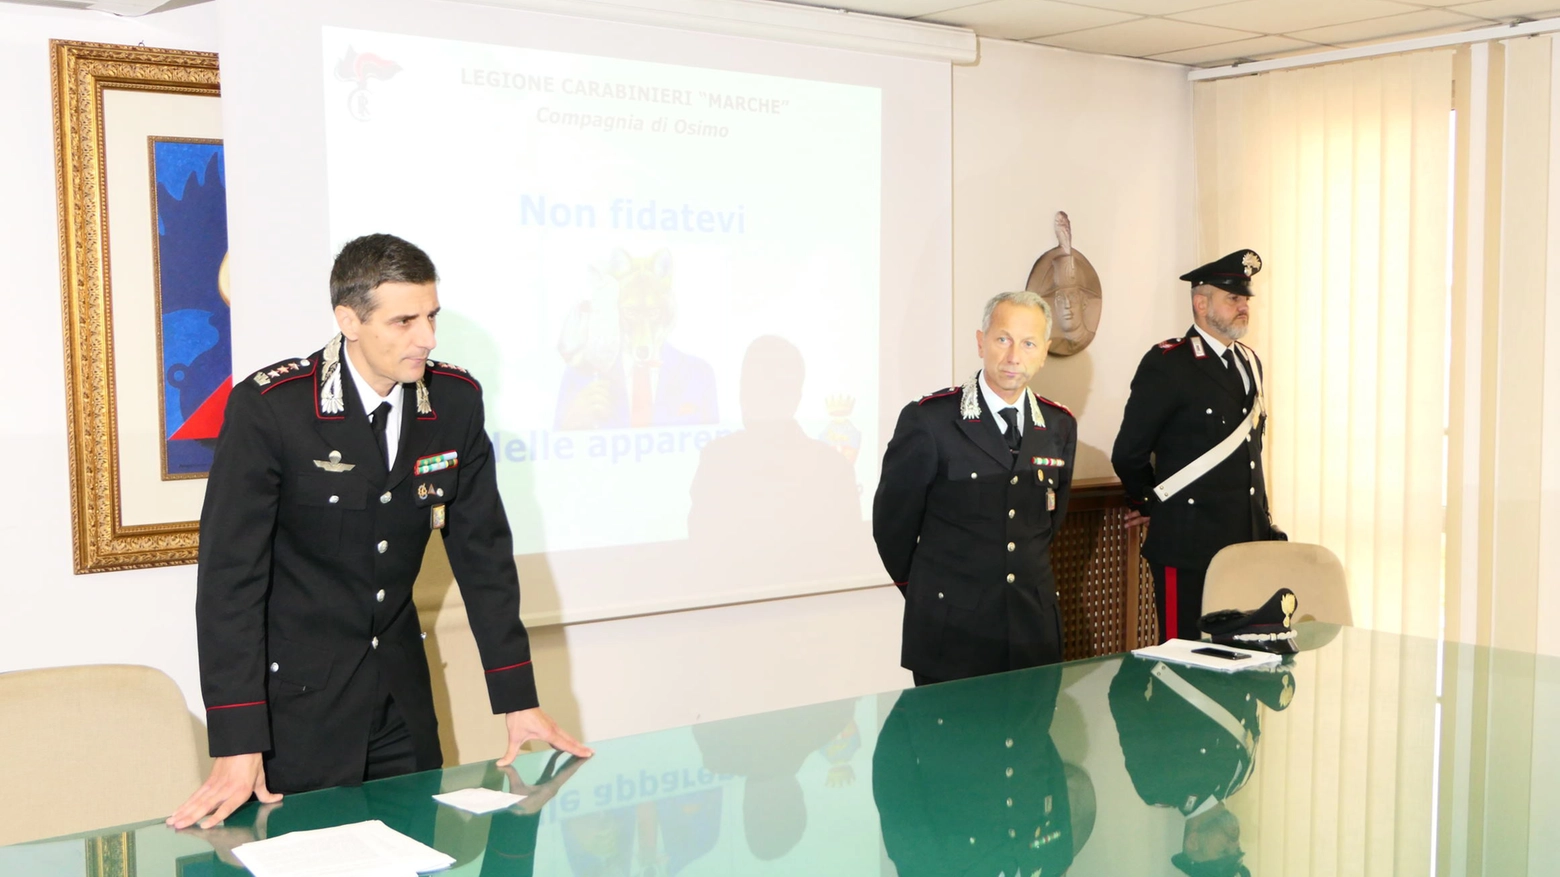 La conferenza stampa dei carabinieri (foto Emma)